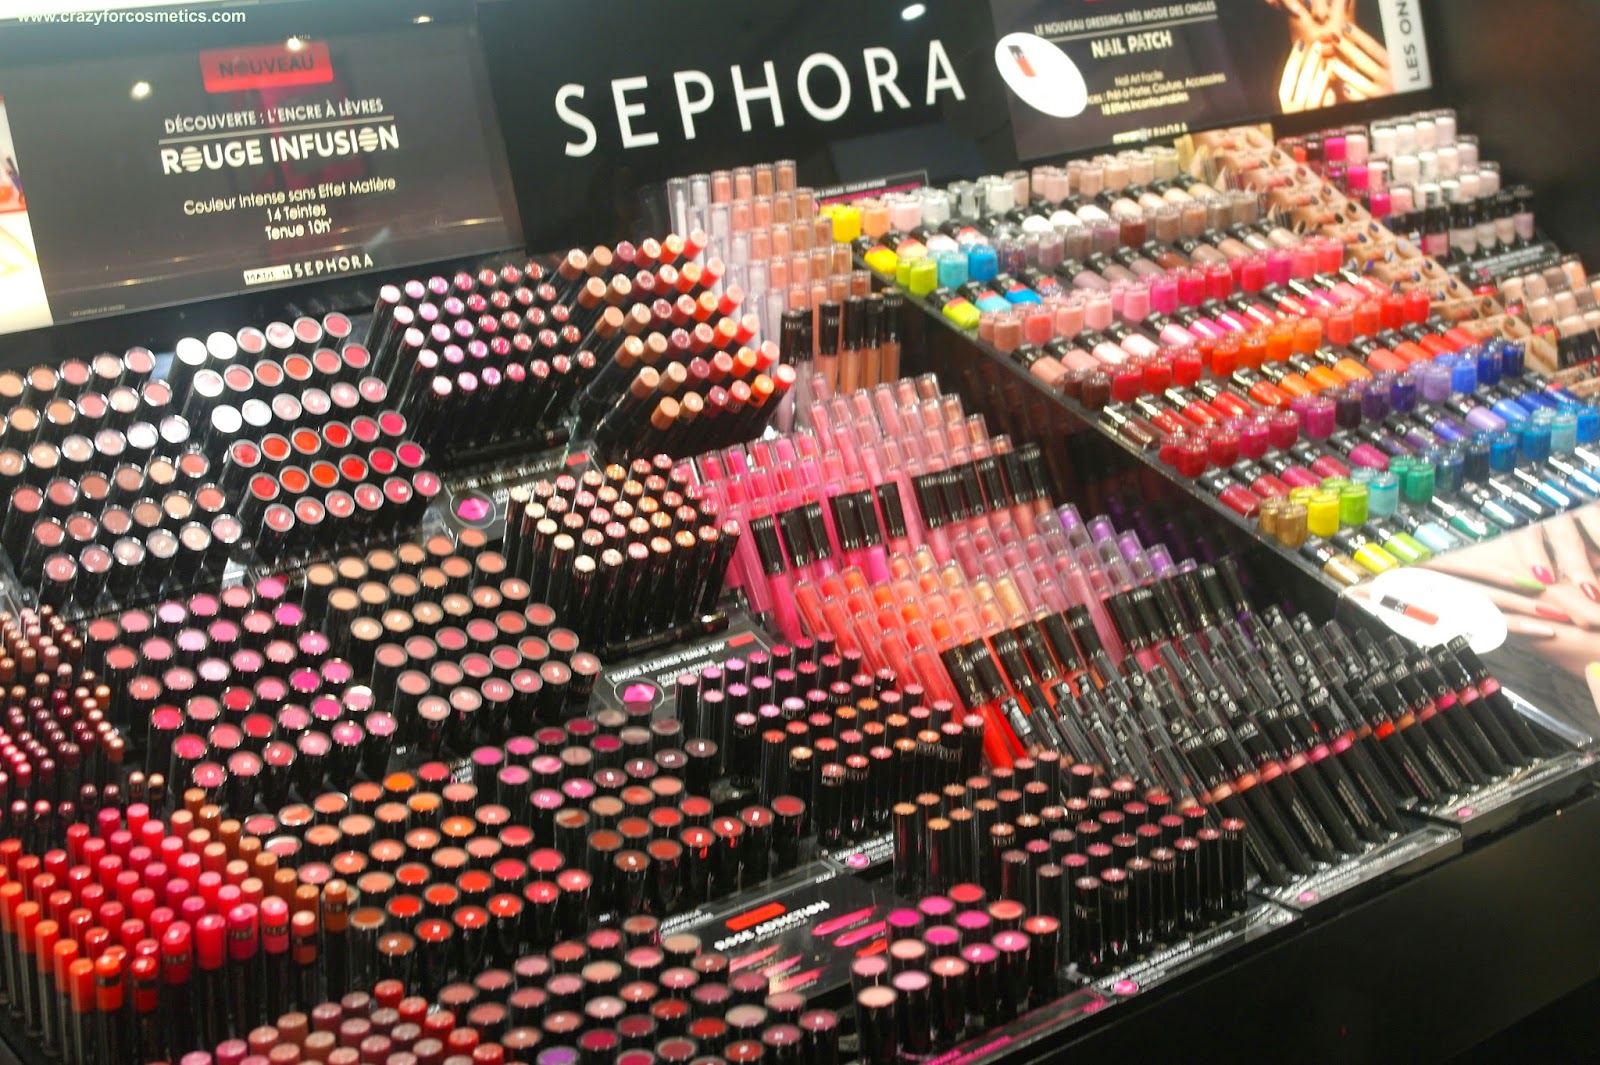 Sephora lipstick counter